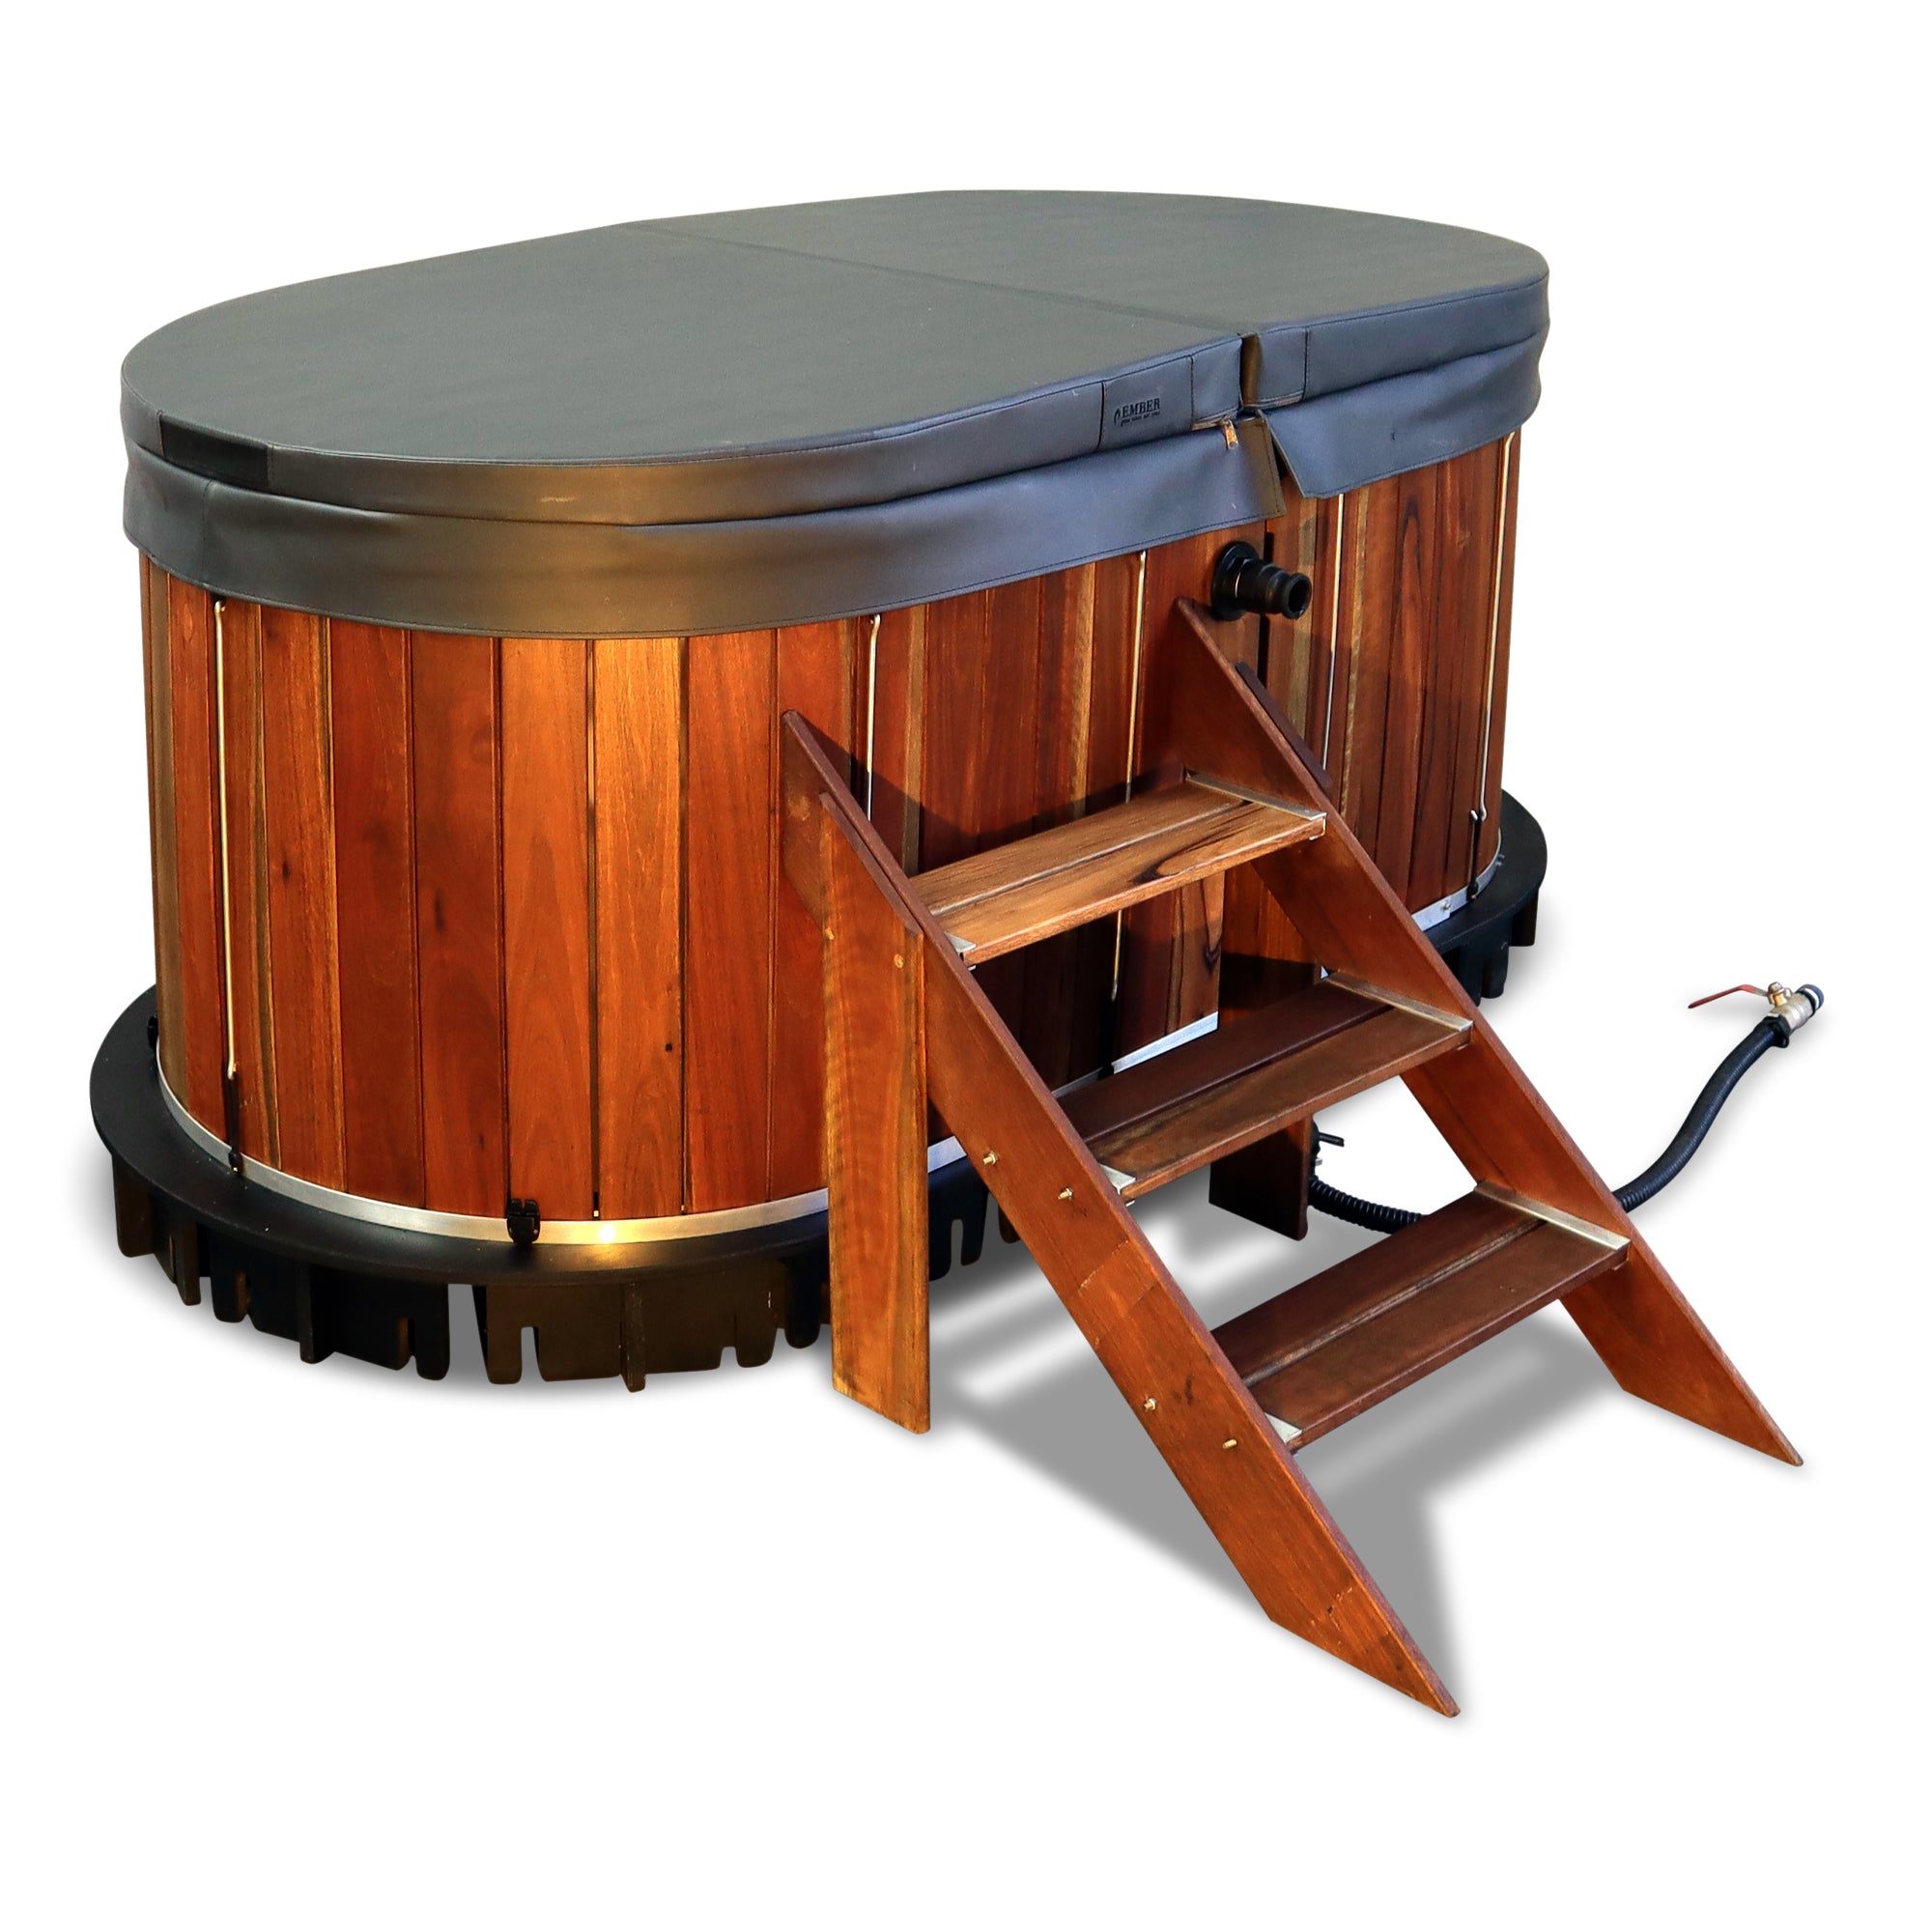 Wood-Fired Hot Tub - Medium (2.0m Oval)